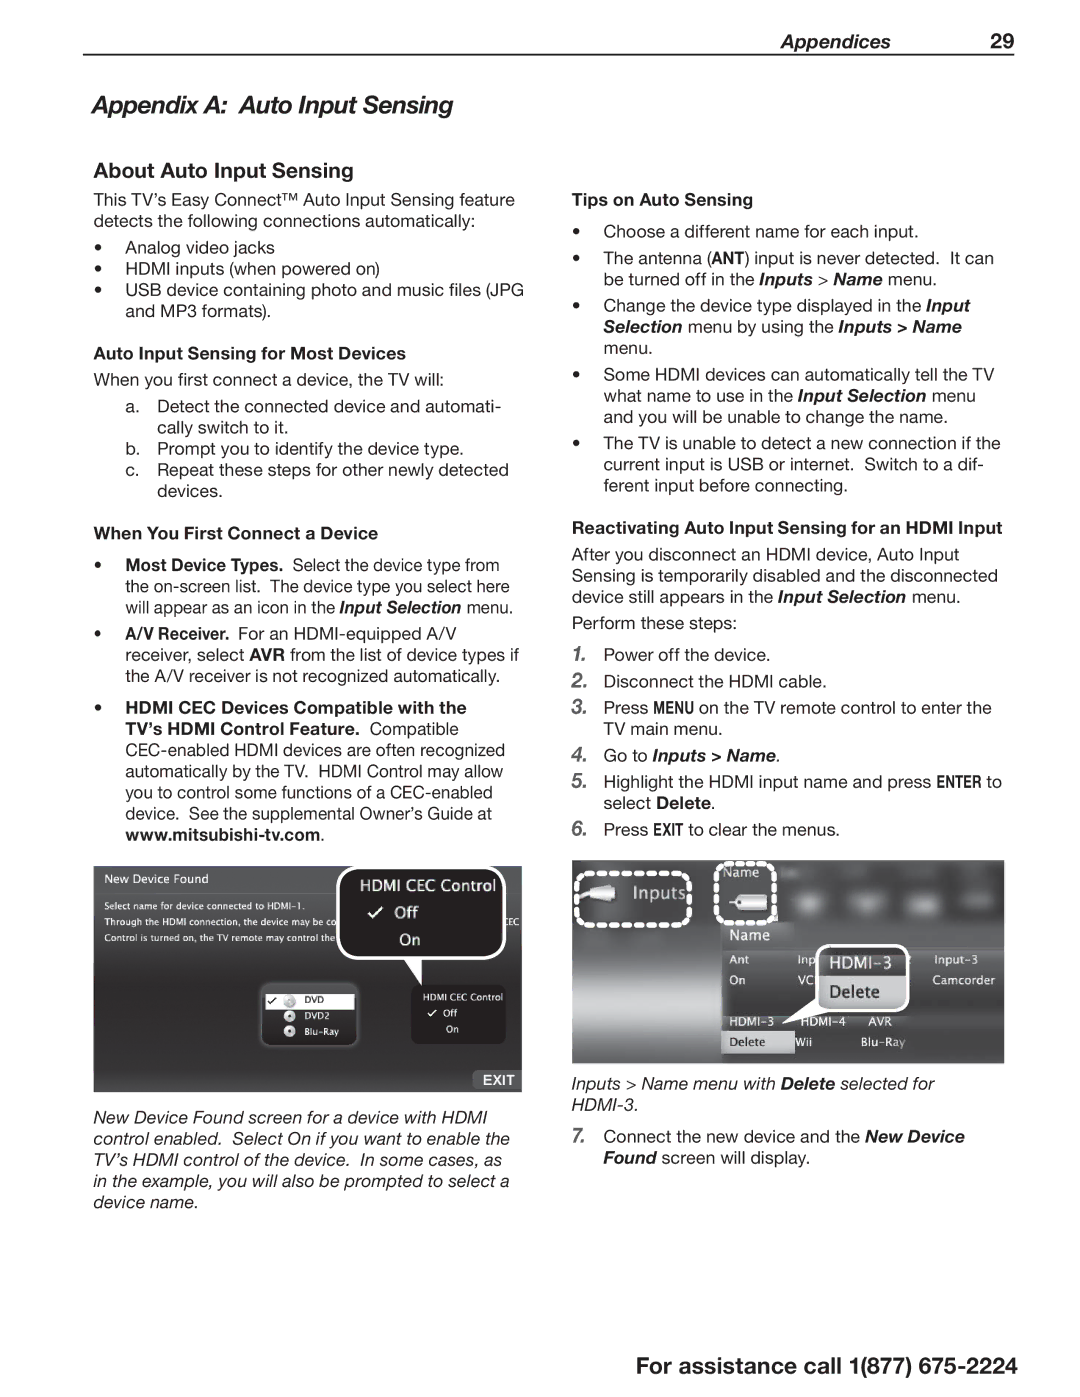 Mitsubishi Electronics L75-A94 manual Appendix a Auto Input Sensing, About Auto Input Sensing, Go to Inputs Name 